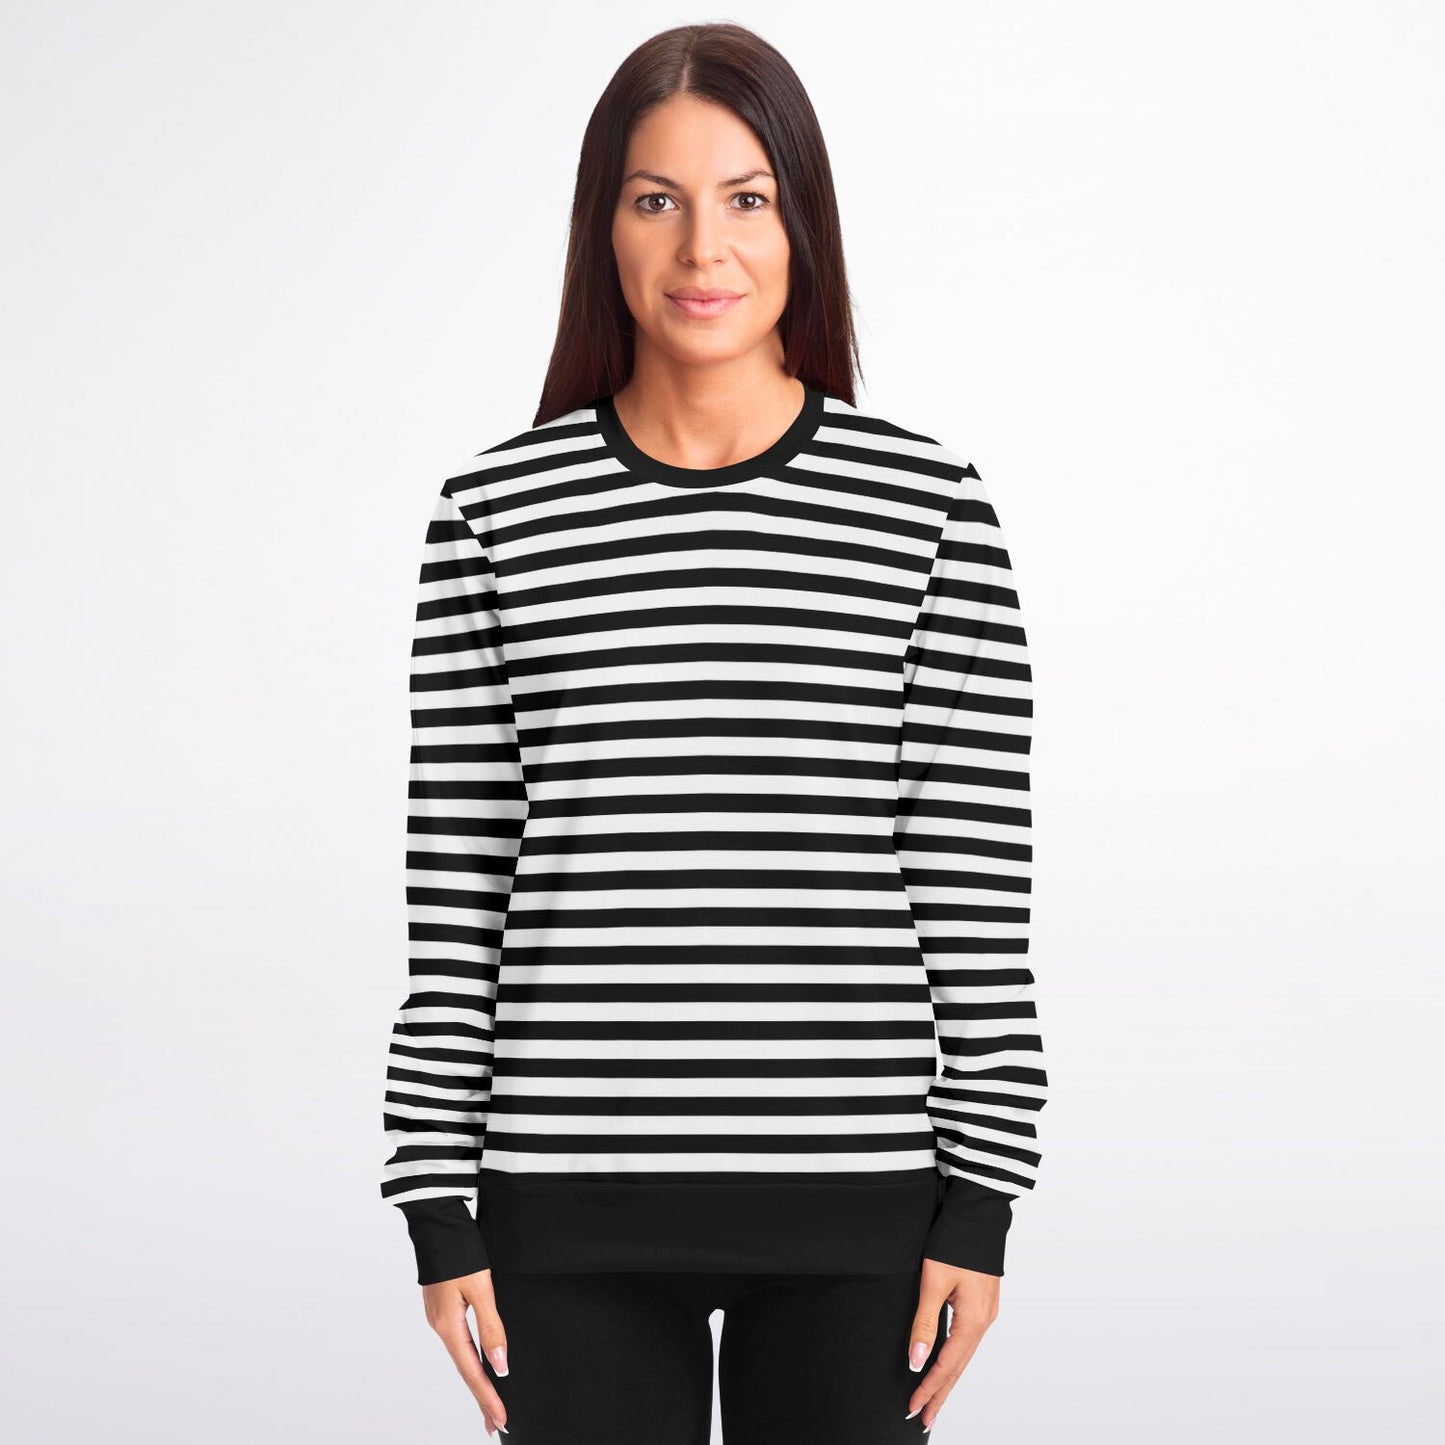 Striped Sweatshirt, Black White Crewneck Fleece Cotton Sweater Jumper Pullover Men Women Adult Aesthetic Designer Top Starcove Fashion